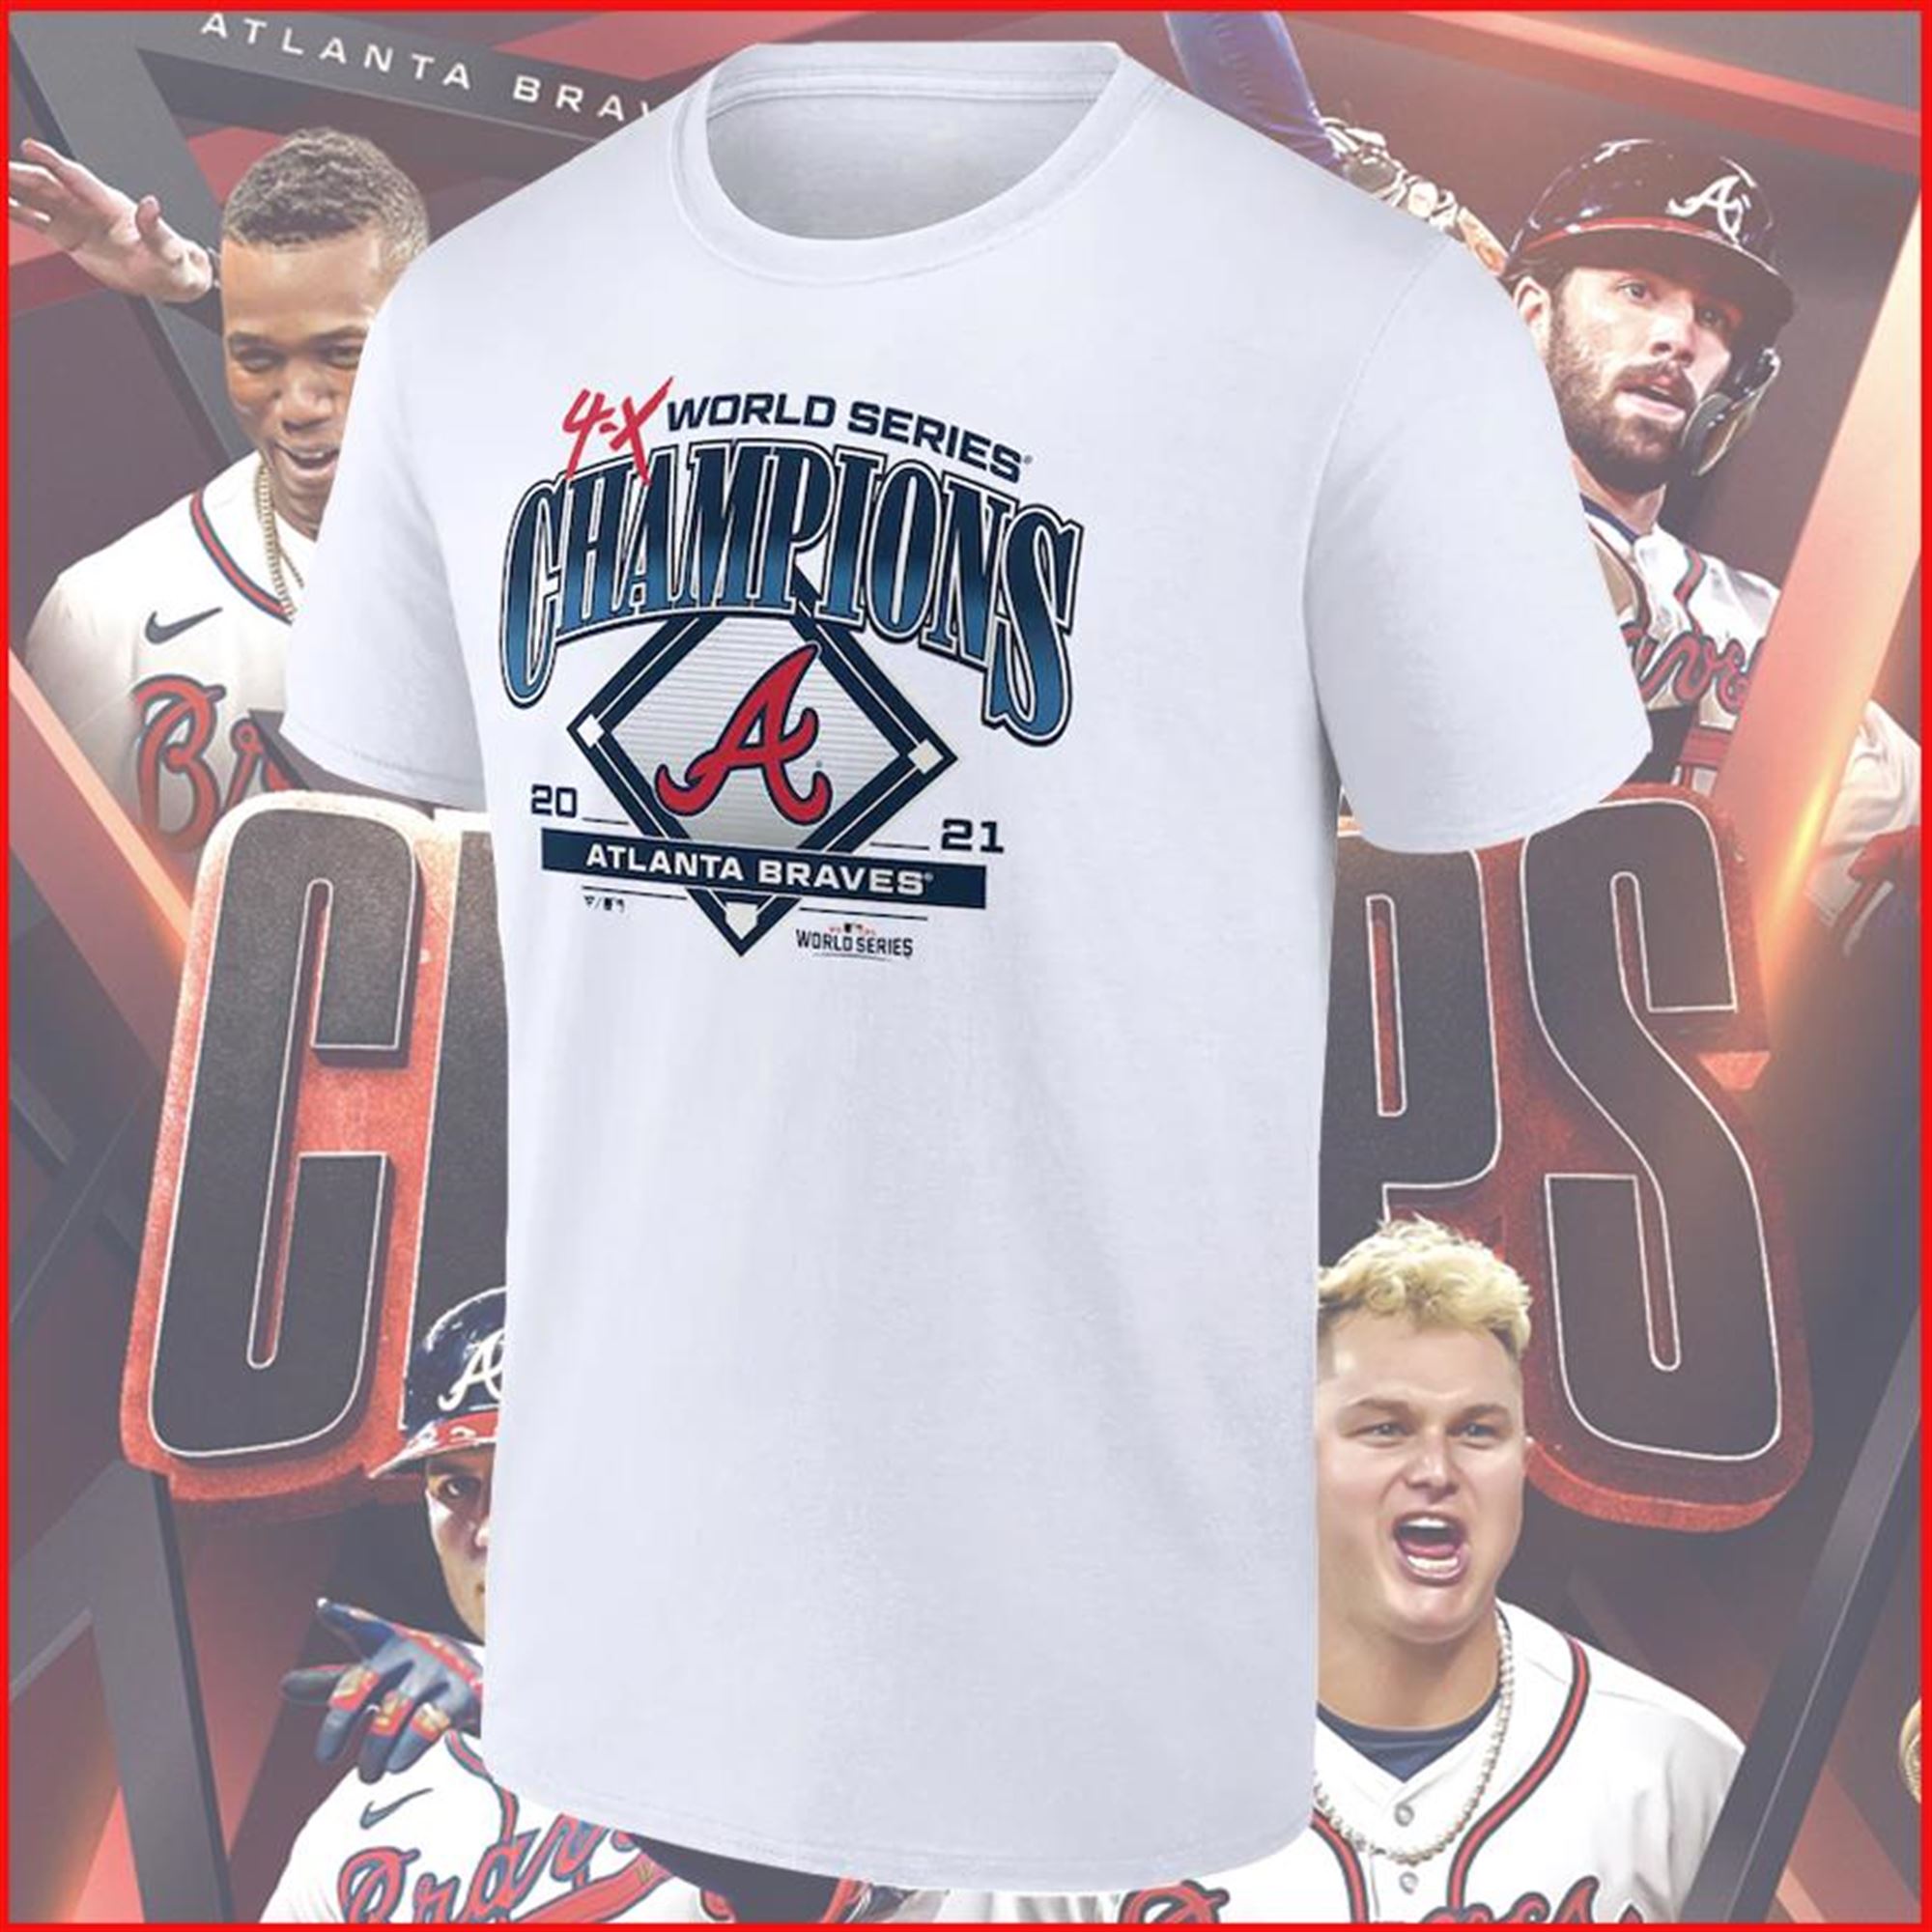 Atlanta Braves 4x World Series Champions T-shirt